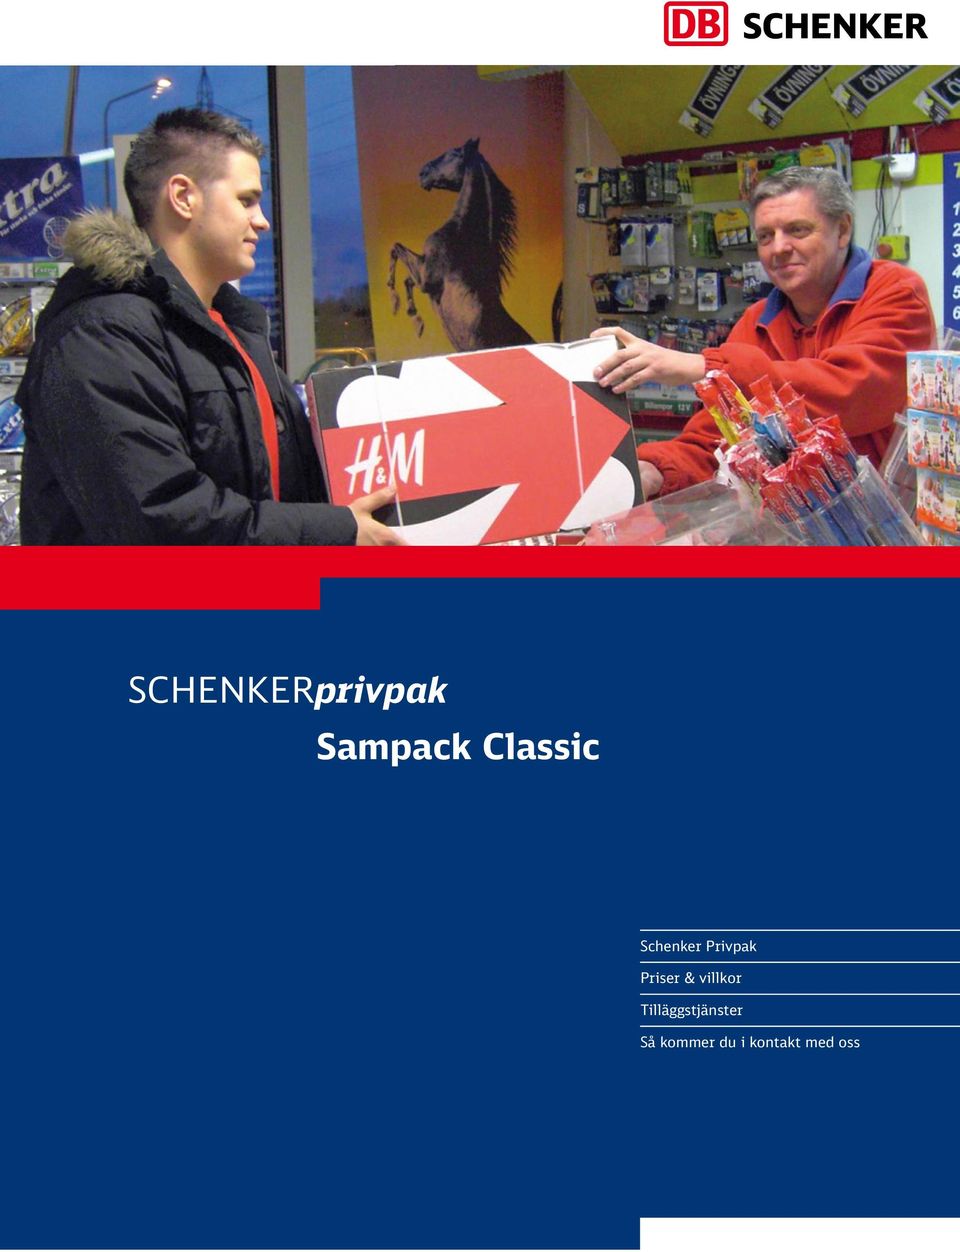 SCHENKERprivpak Sampack Classic. Schenker Privpak. Priser & villkor.  Tilläggstjänster. Så kommer du i kontakt med oss - PDF Gratis nedladdning